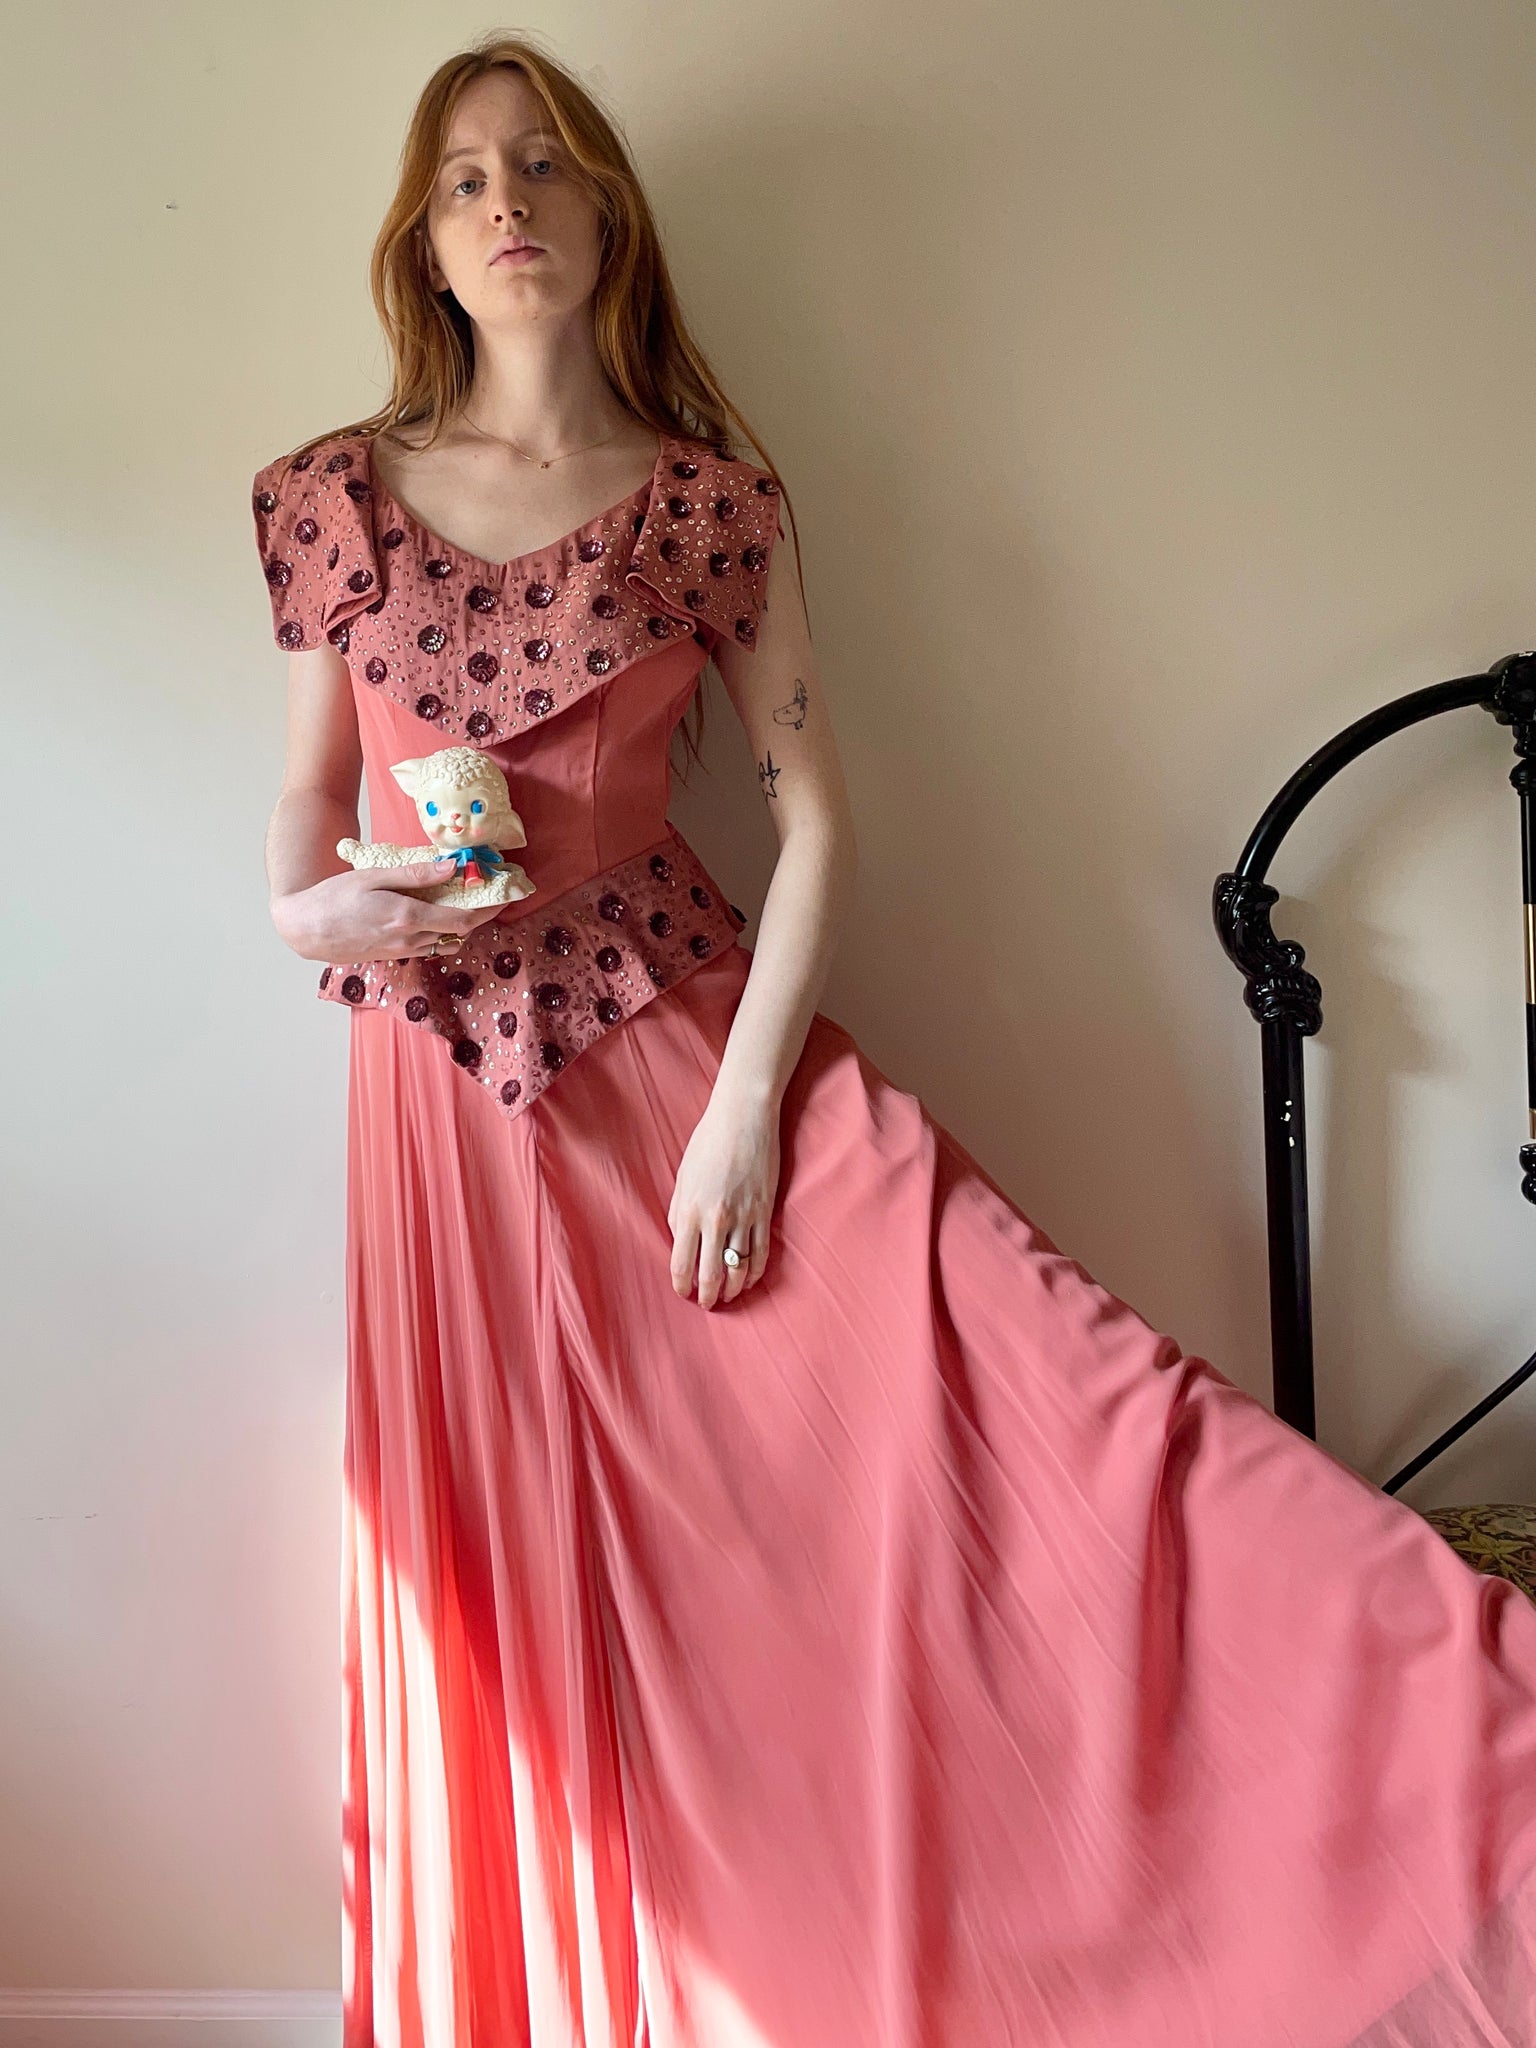 1940s silk chiffon salmon pink sequin prom dress